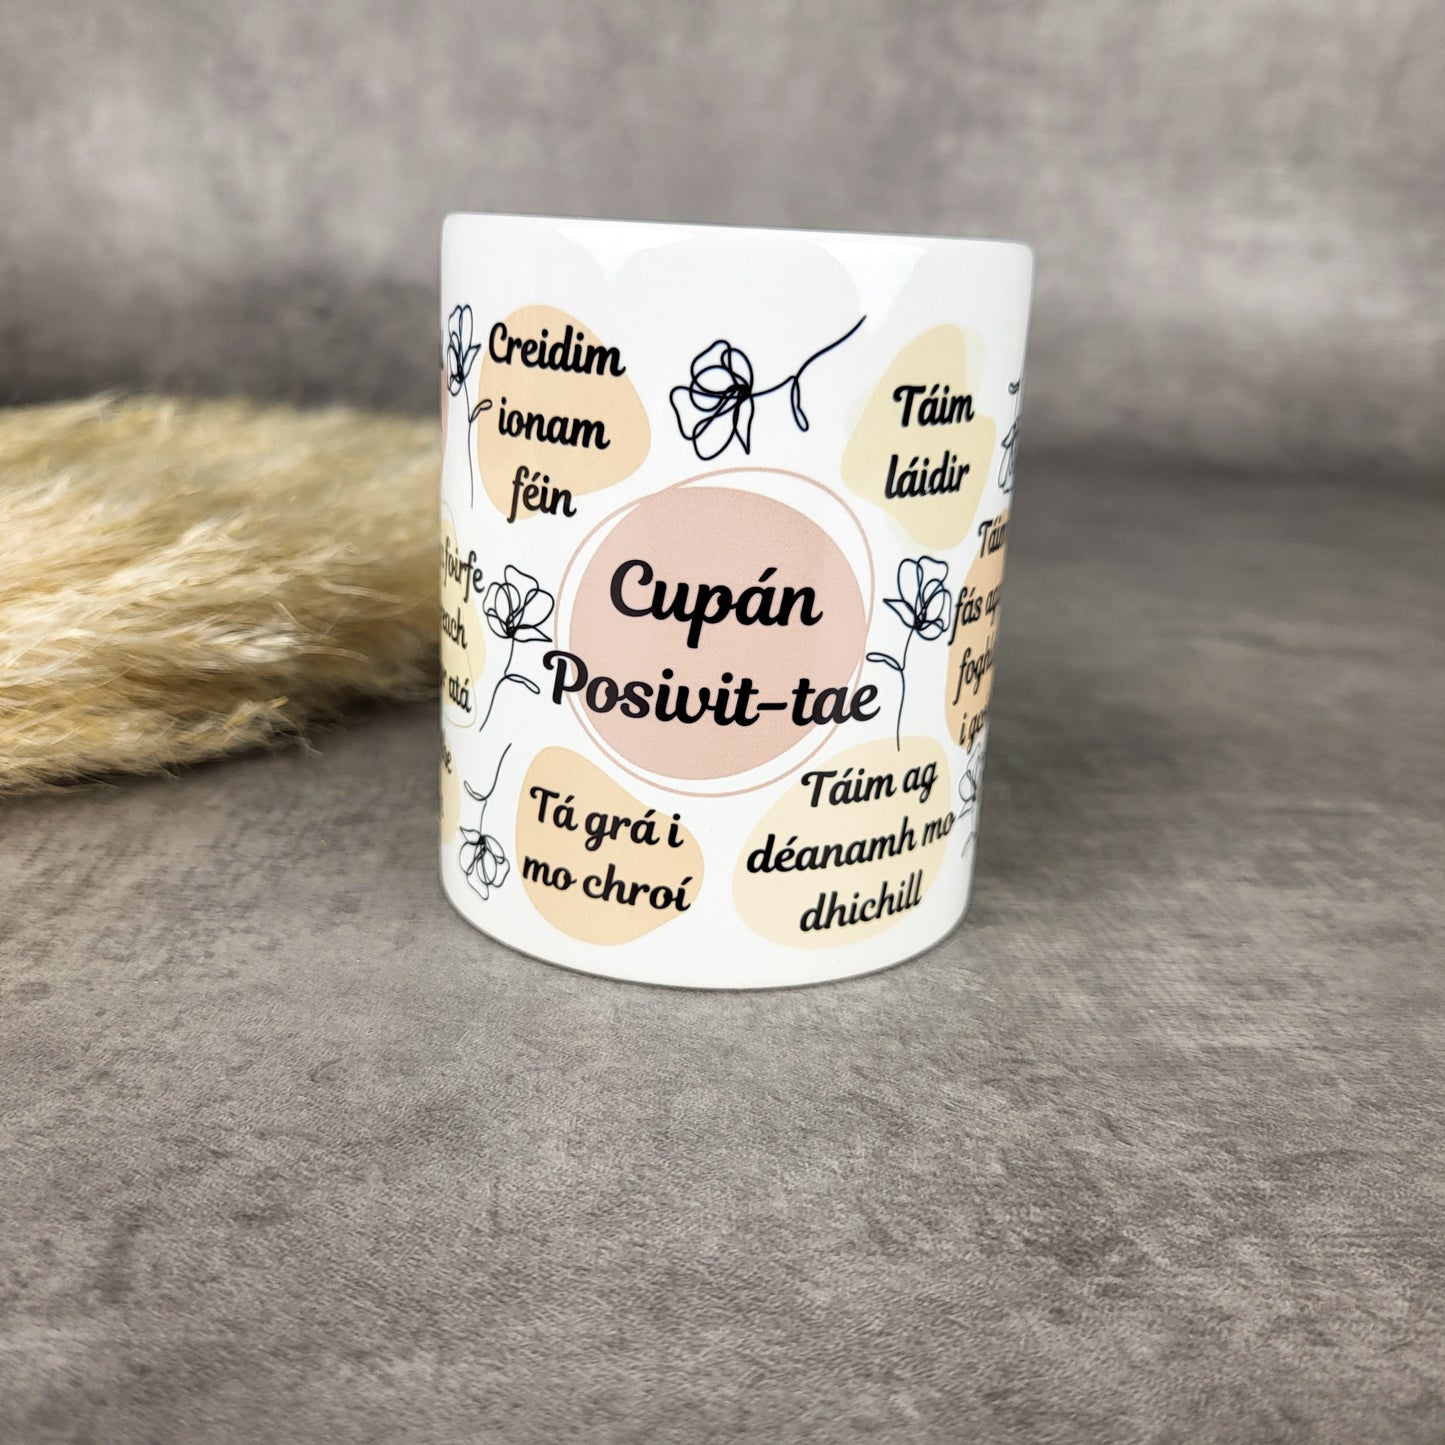 Cupán positivit-tae mug